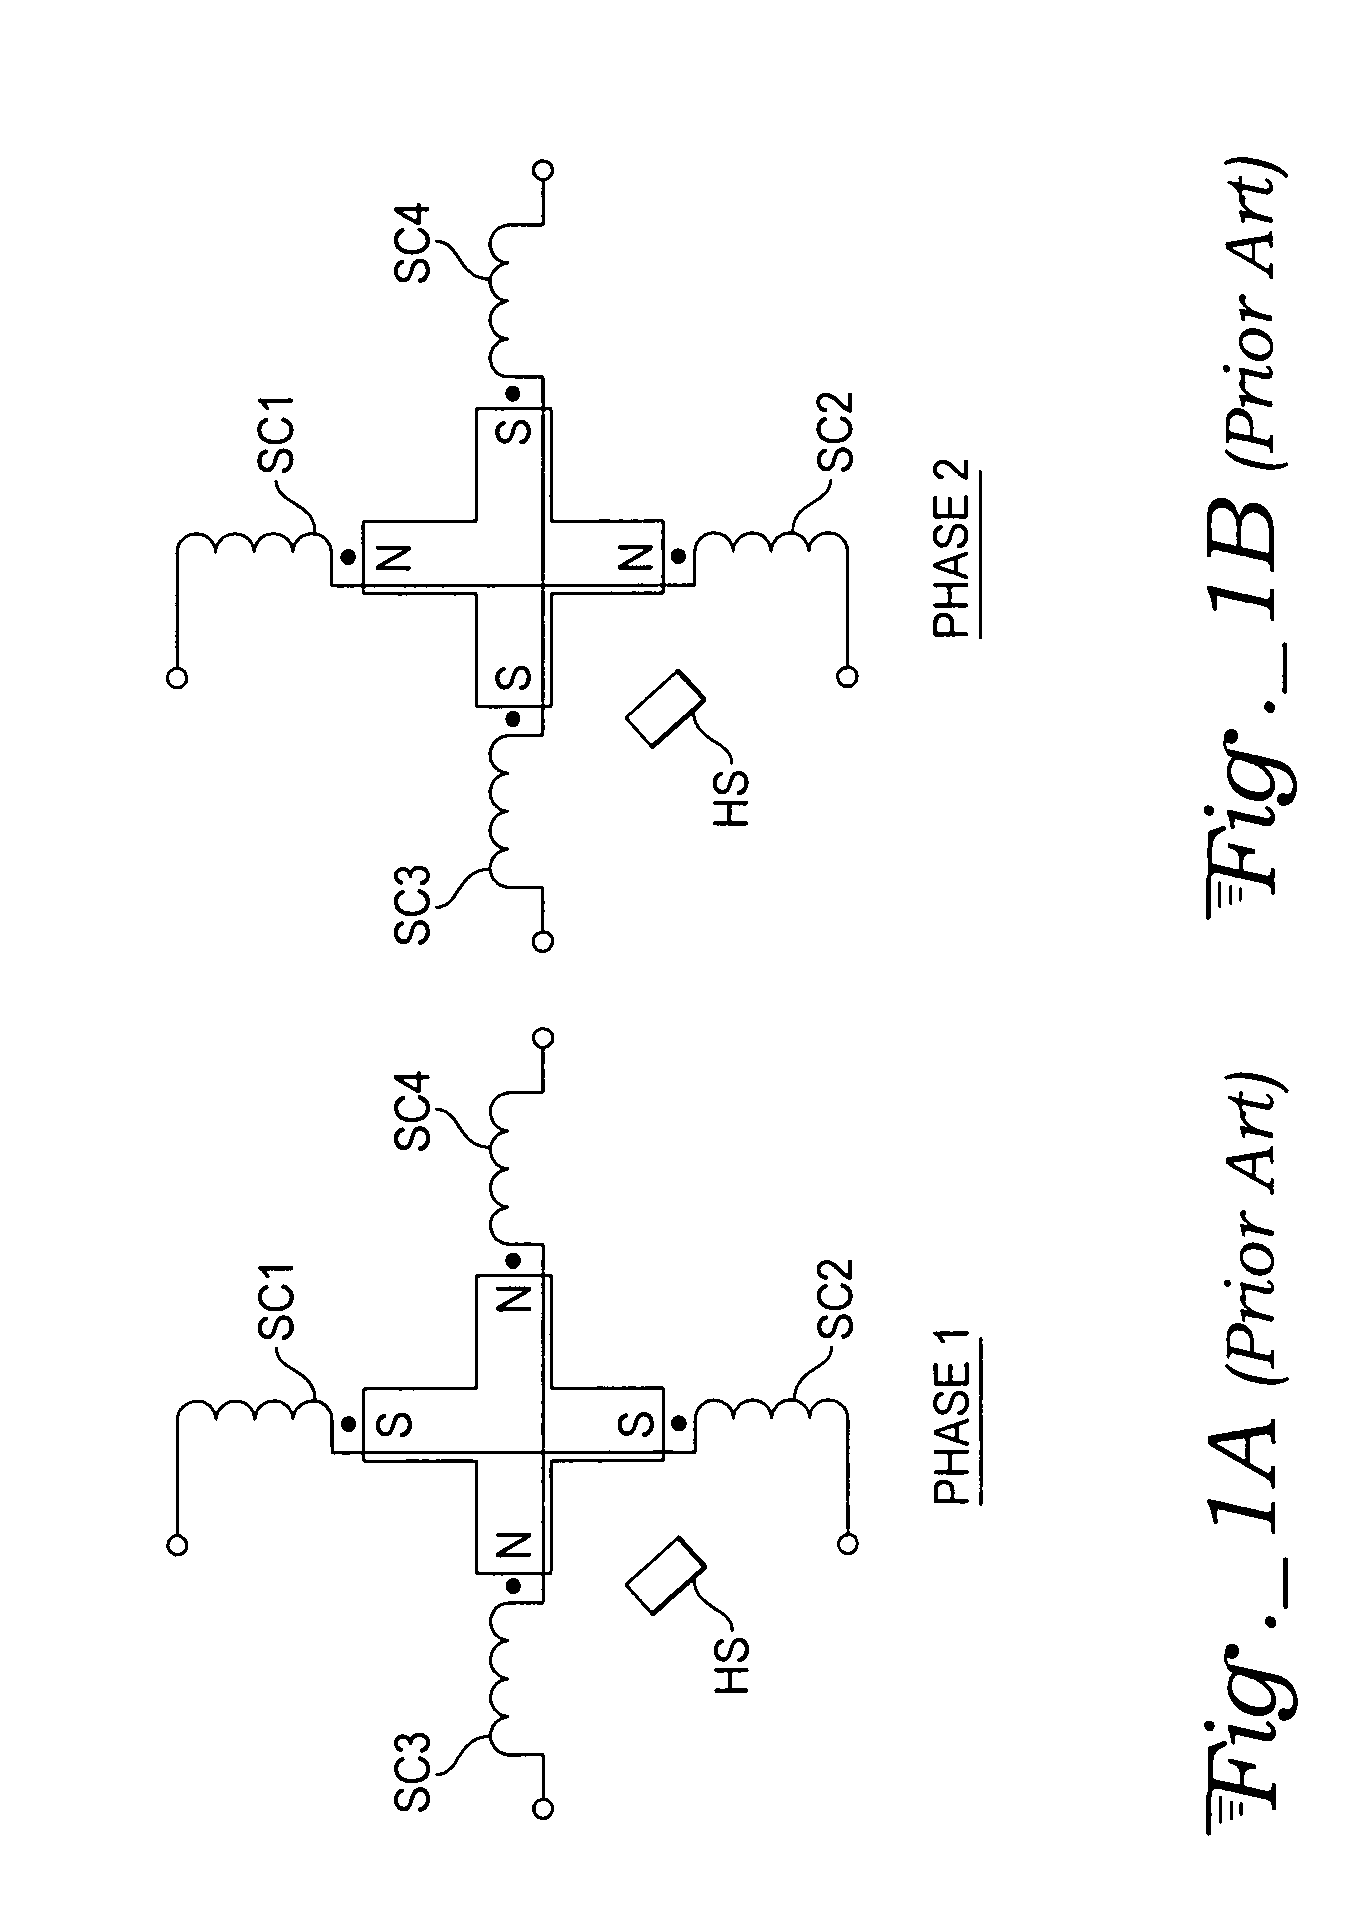 Sensorless control of two-phase brushless DC motor